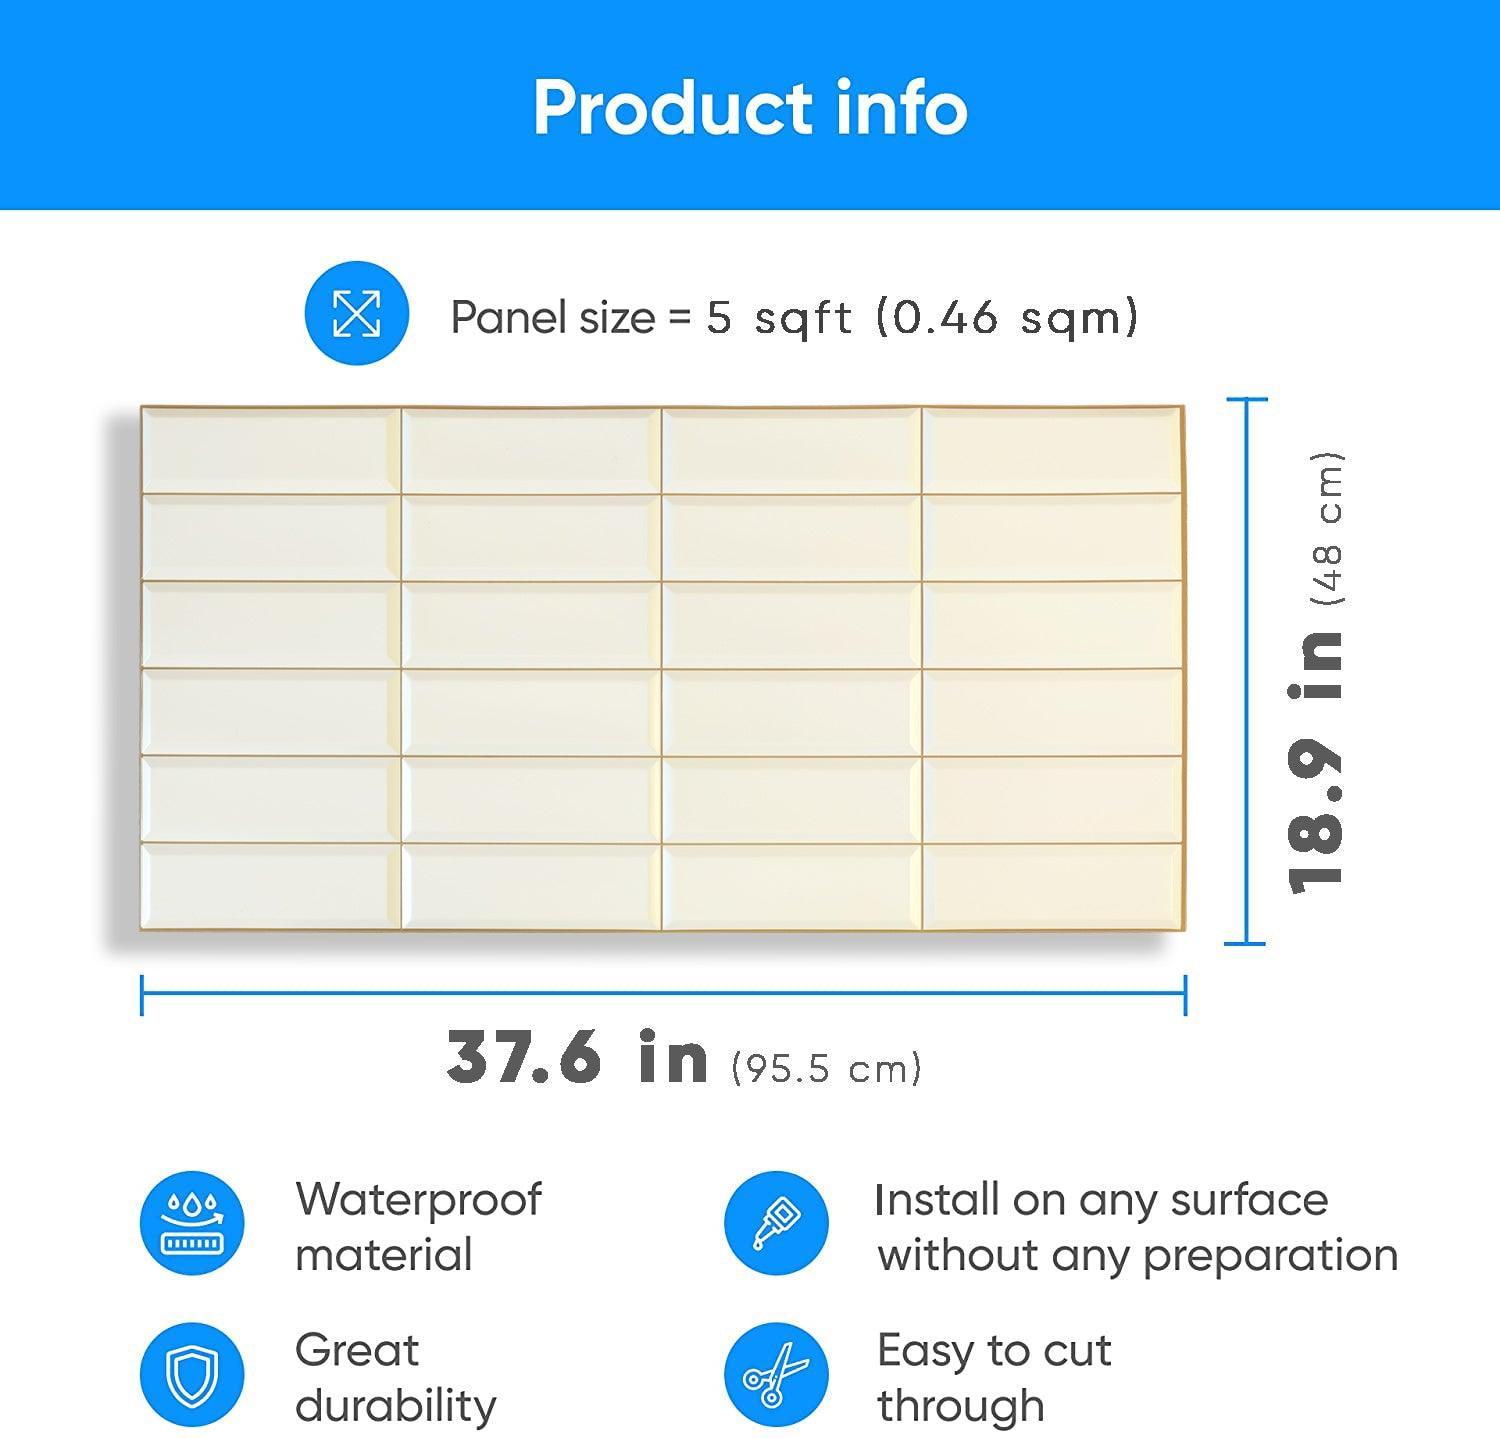 3D Wall Panels - Tile Beige Seam - Smart Profile